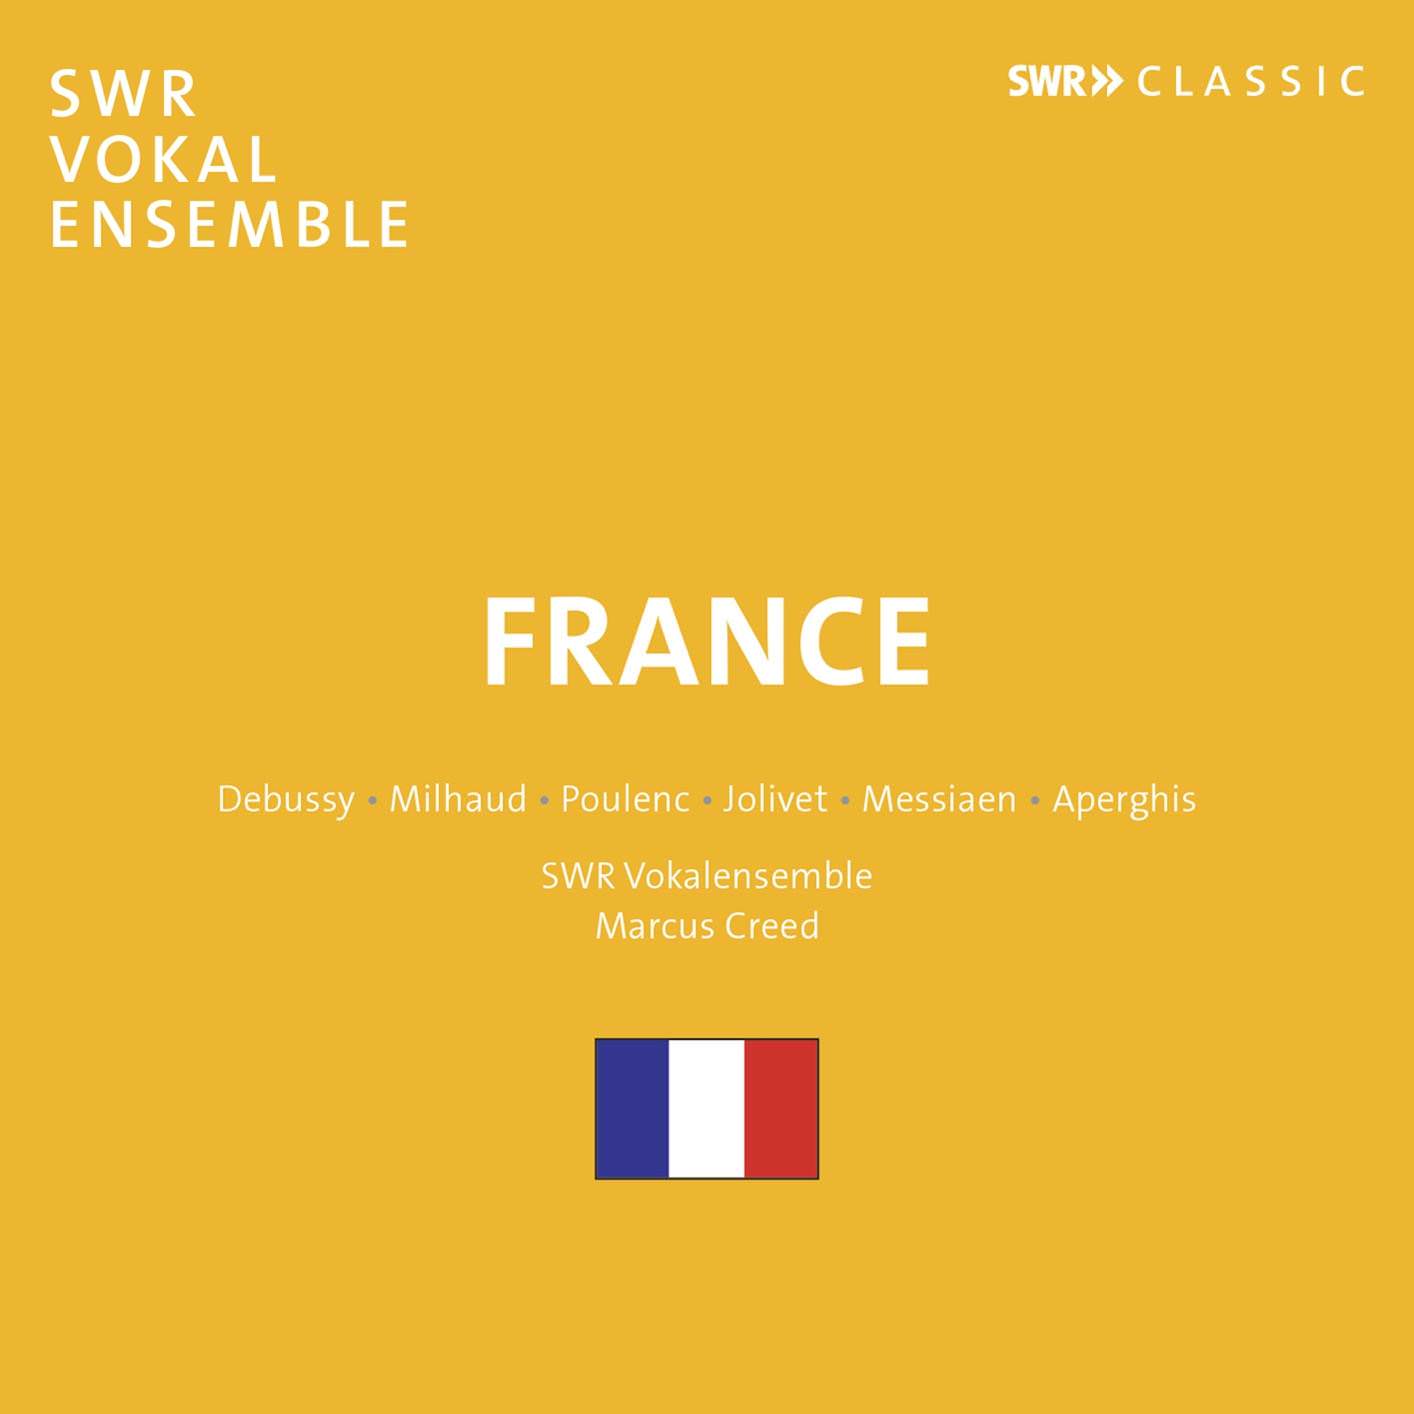 SWR Vokalensemble Stuttgart & Marcus Creed - France (2018) [FLAC 24bit/48kHz]